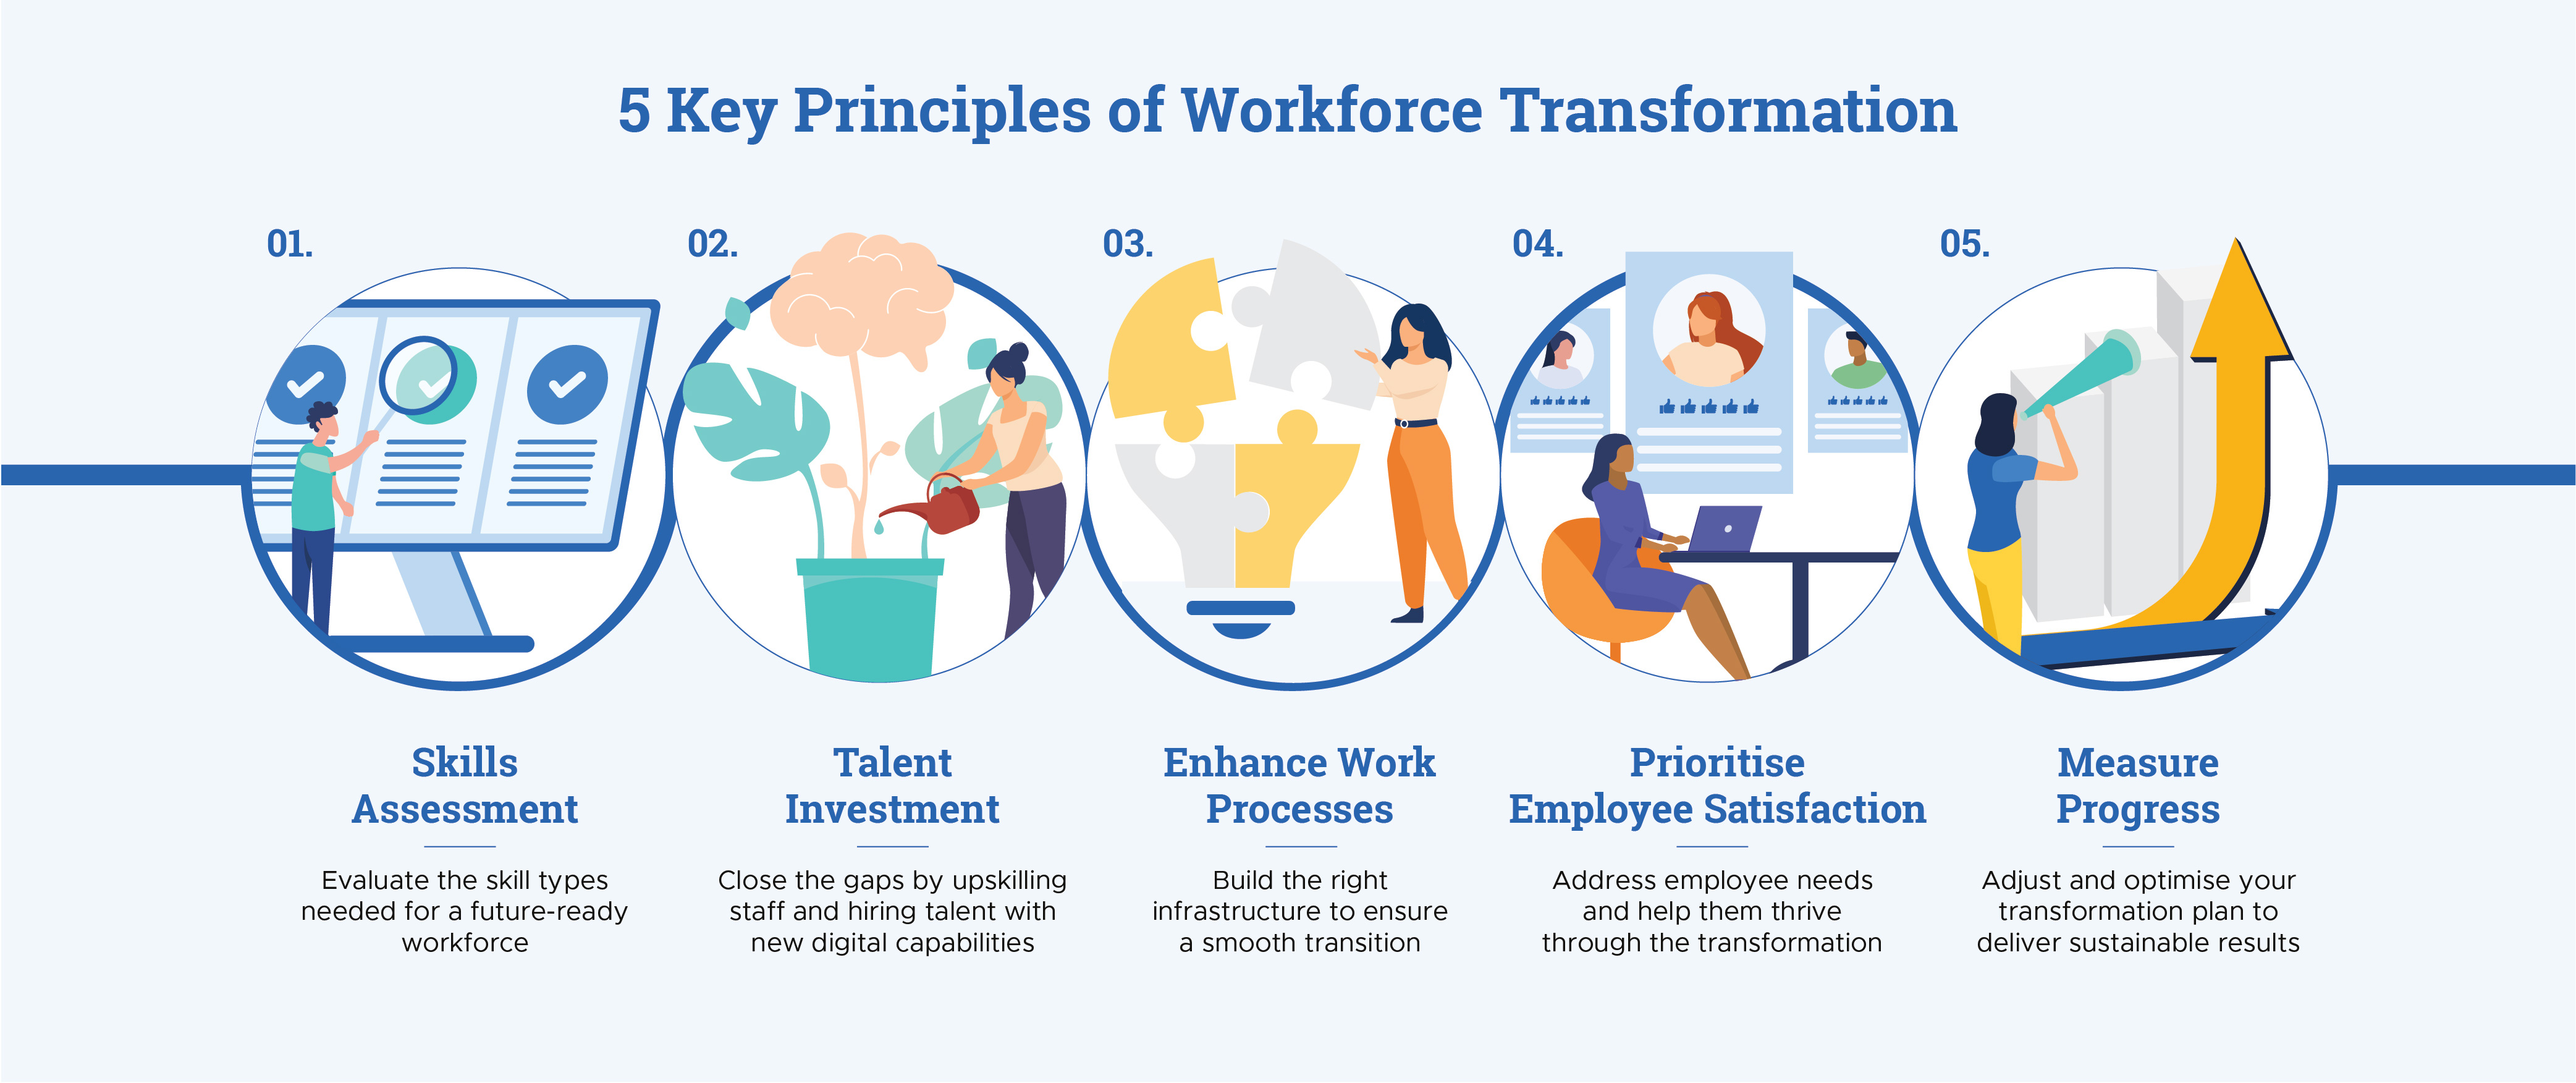 5 Key Principles of Workforce Transformation